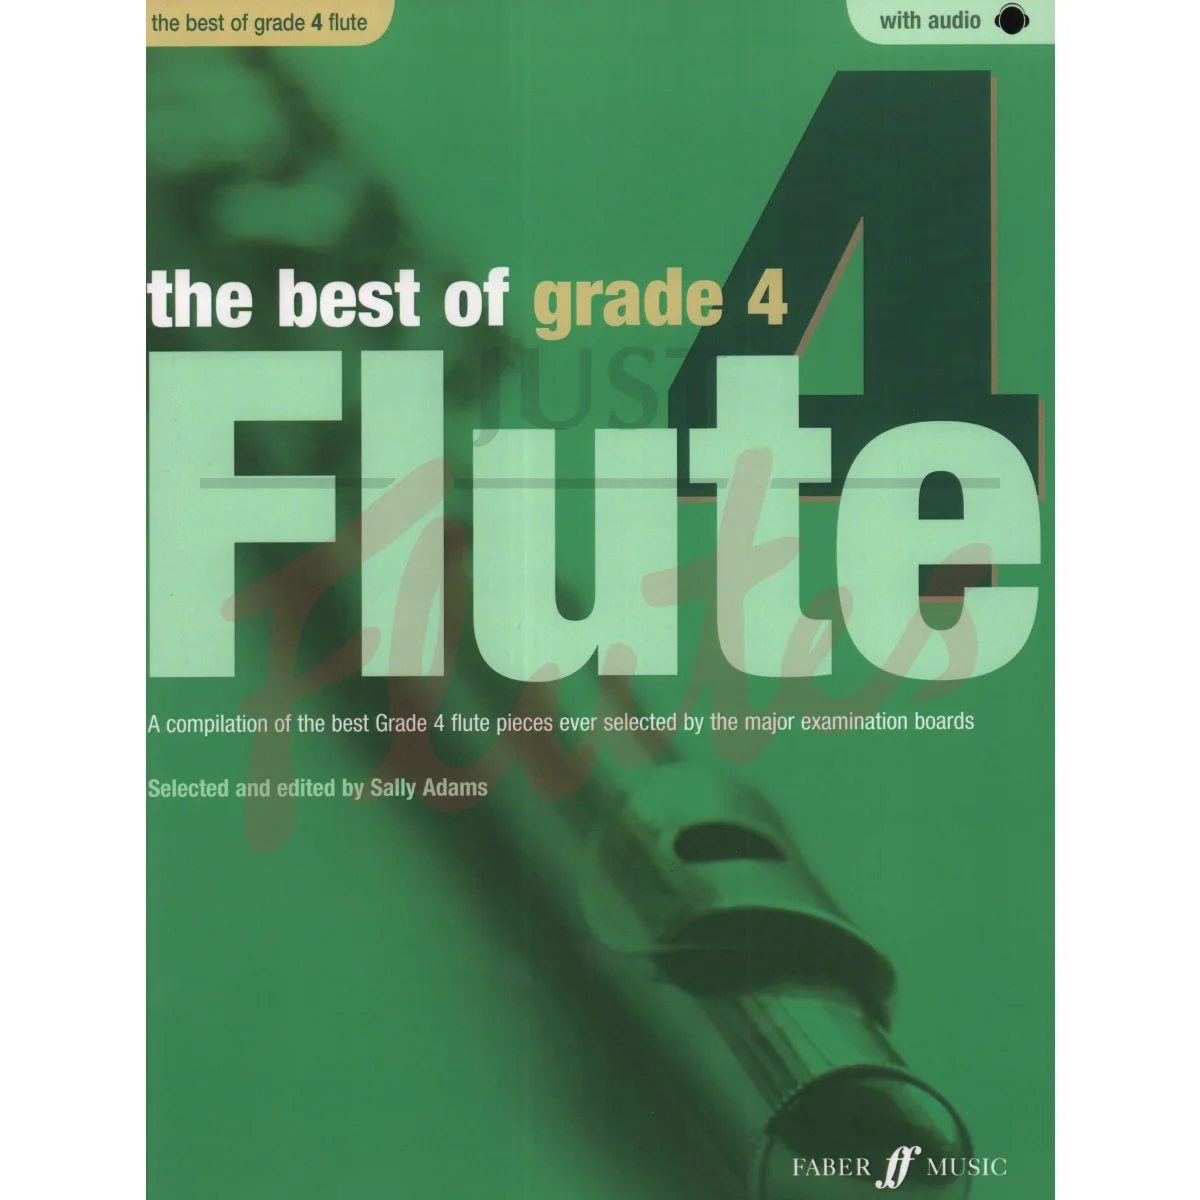 The Best of Grade 4 Flute